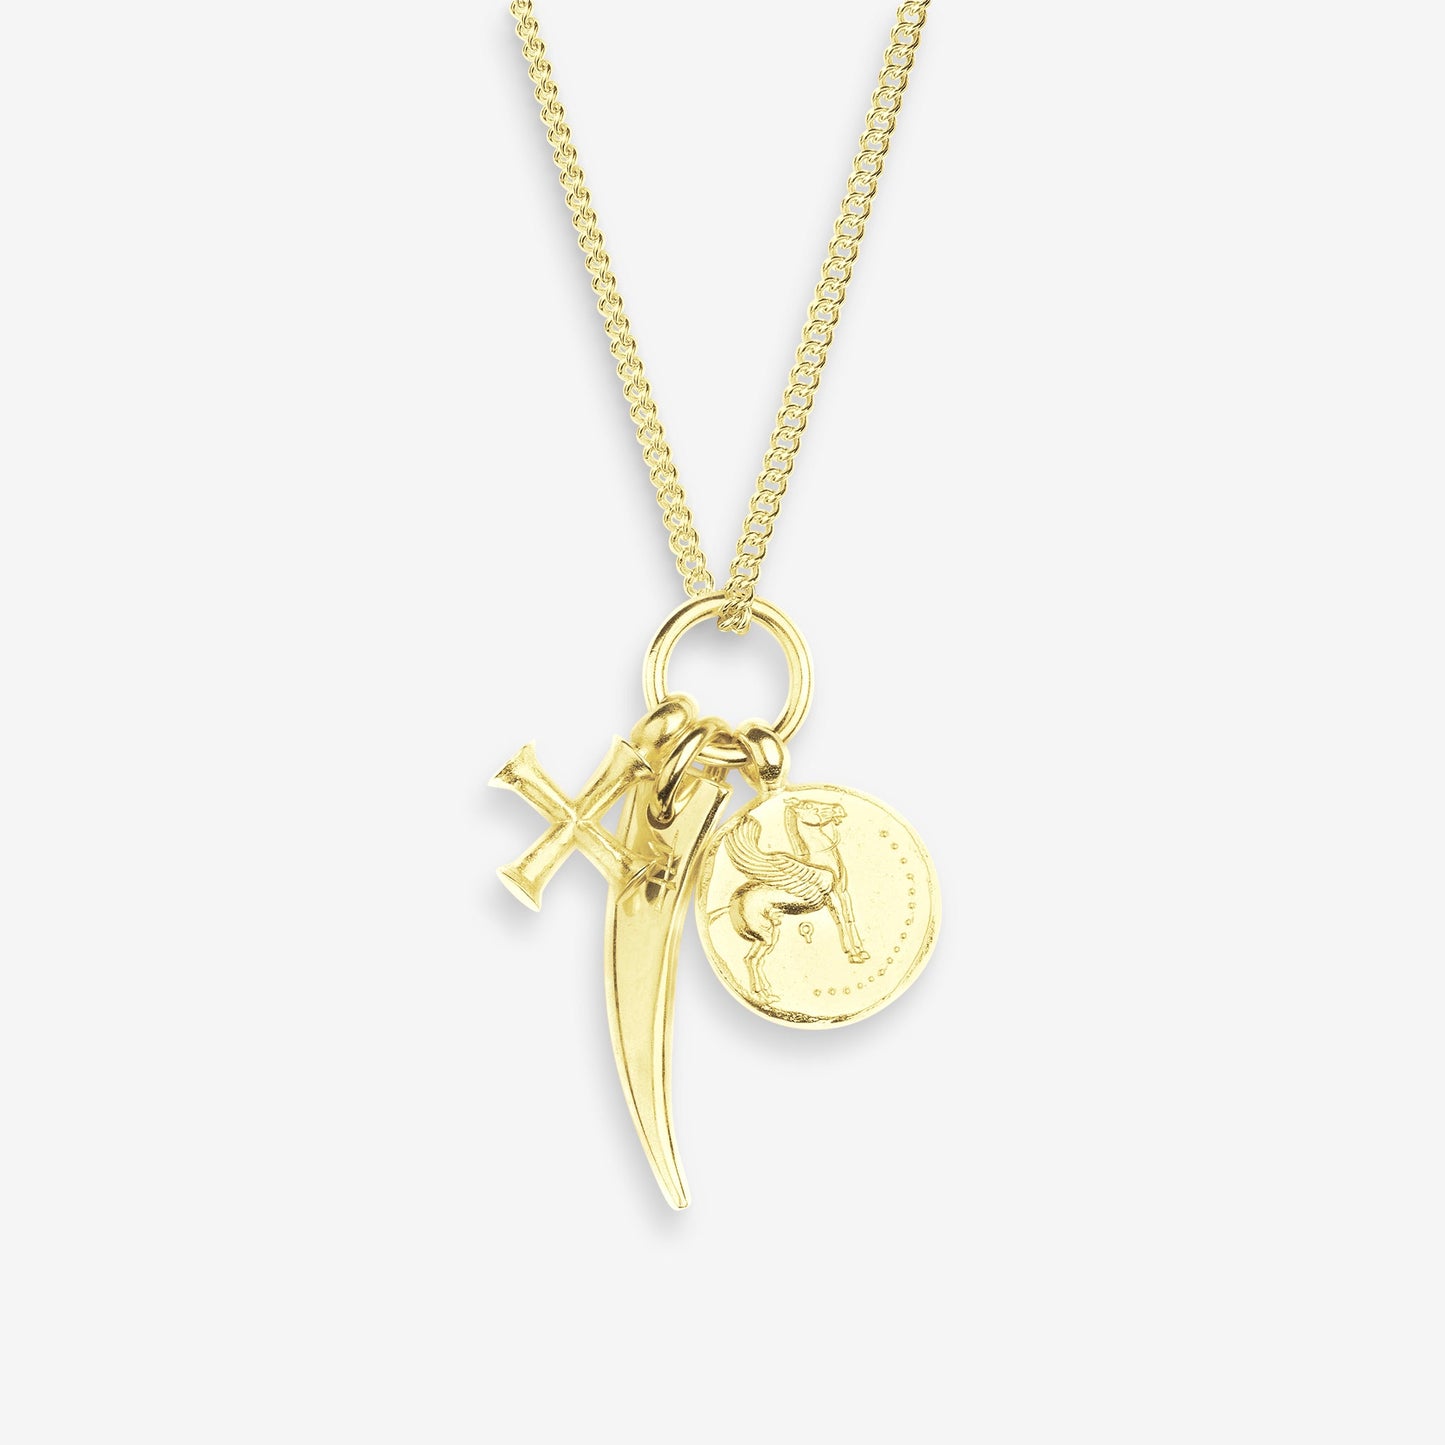 Pegasus, Byzantine cross and Congo necklace